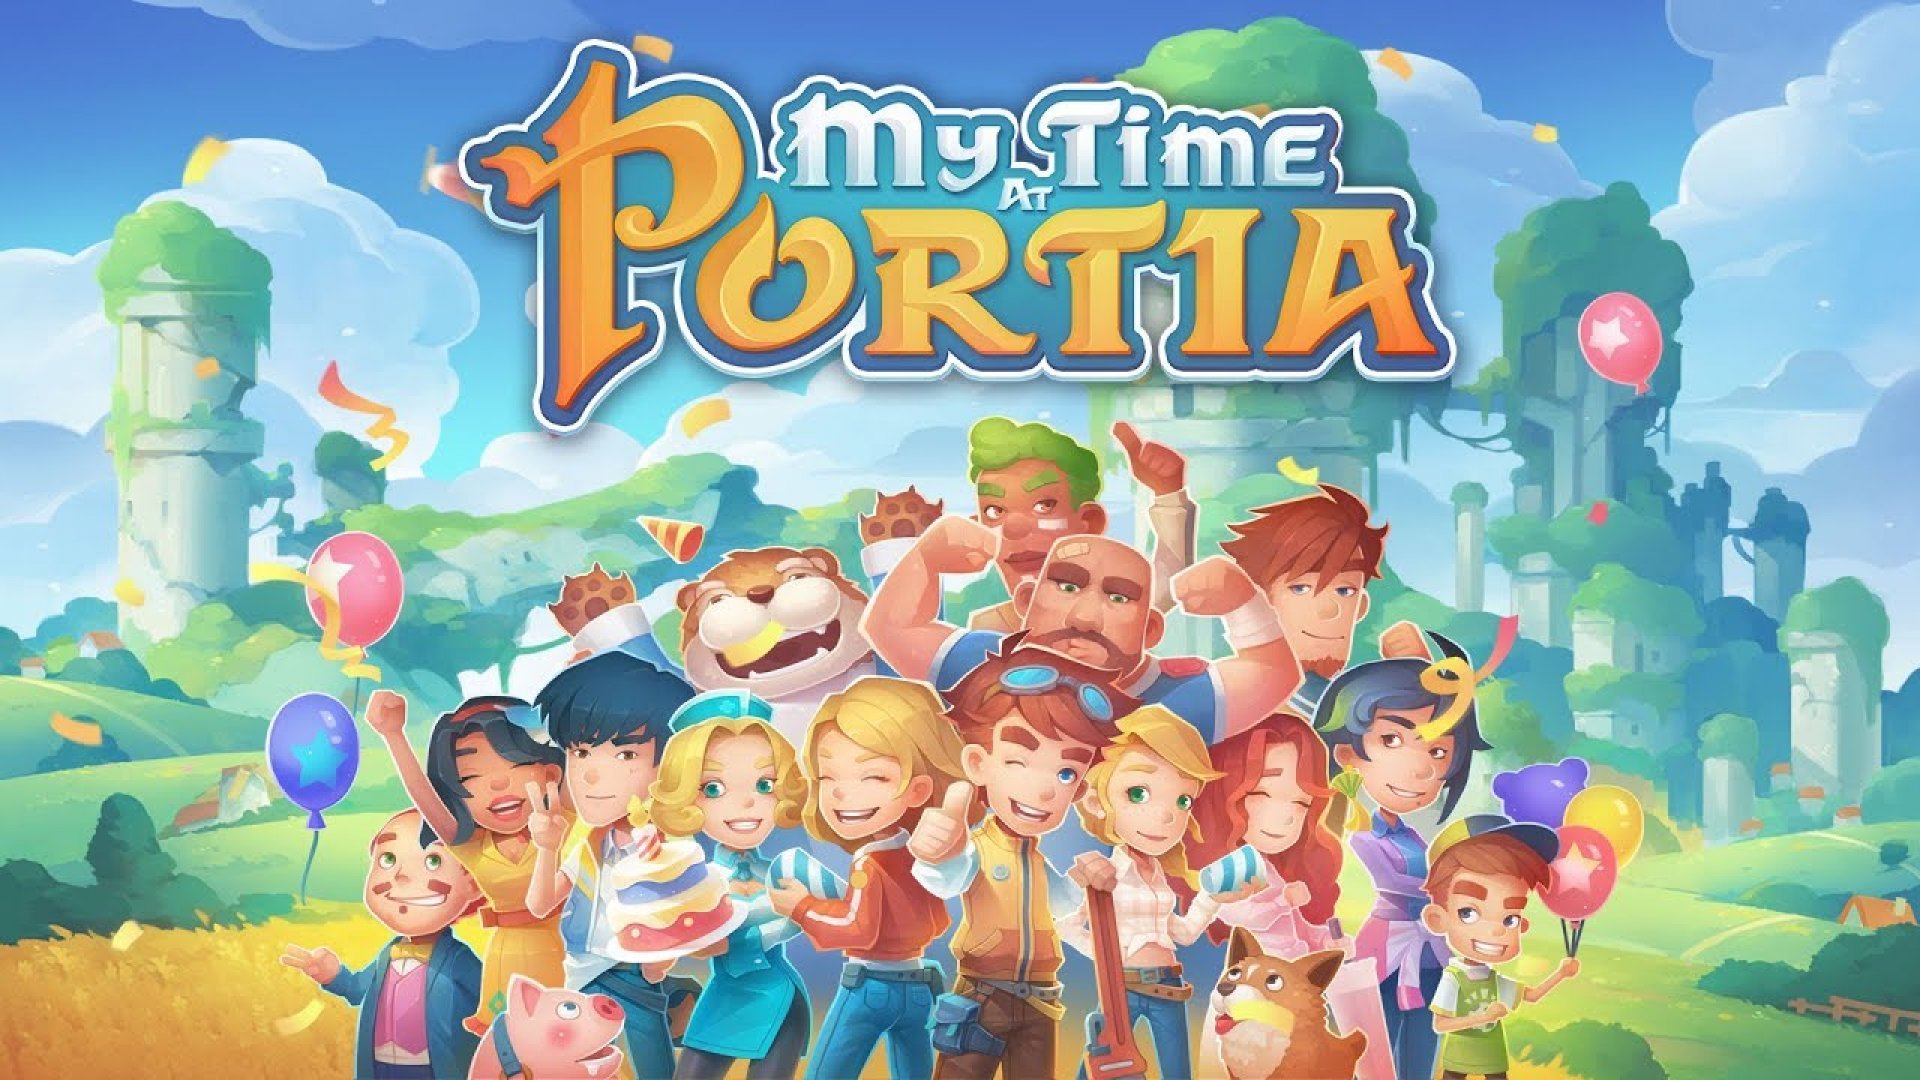 Mine time. My time in Portia игра. My time at Portia. Май тайм эт Портиа. Май тайм эт Портия Вики.